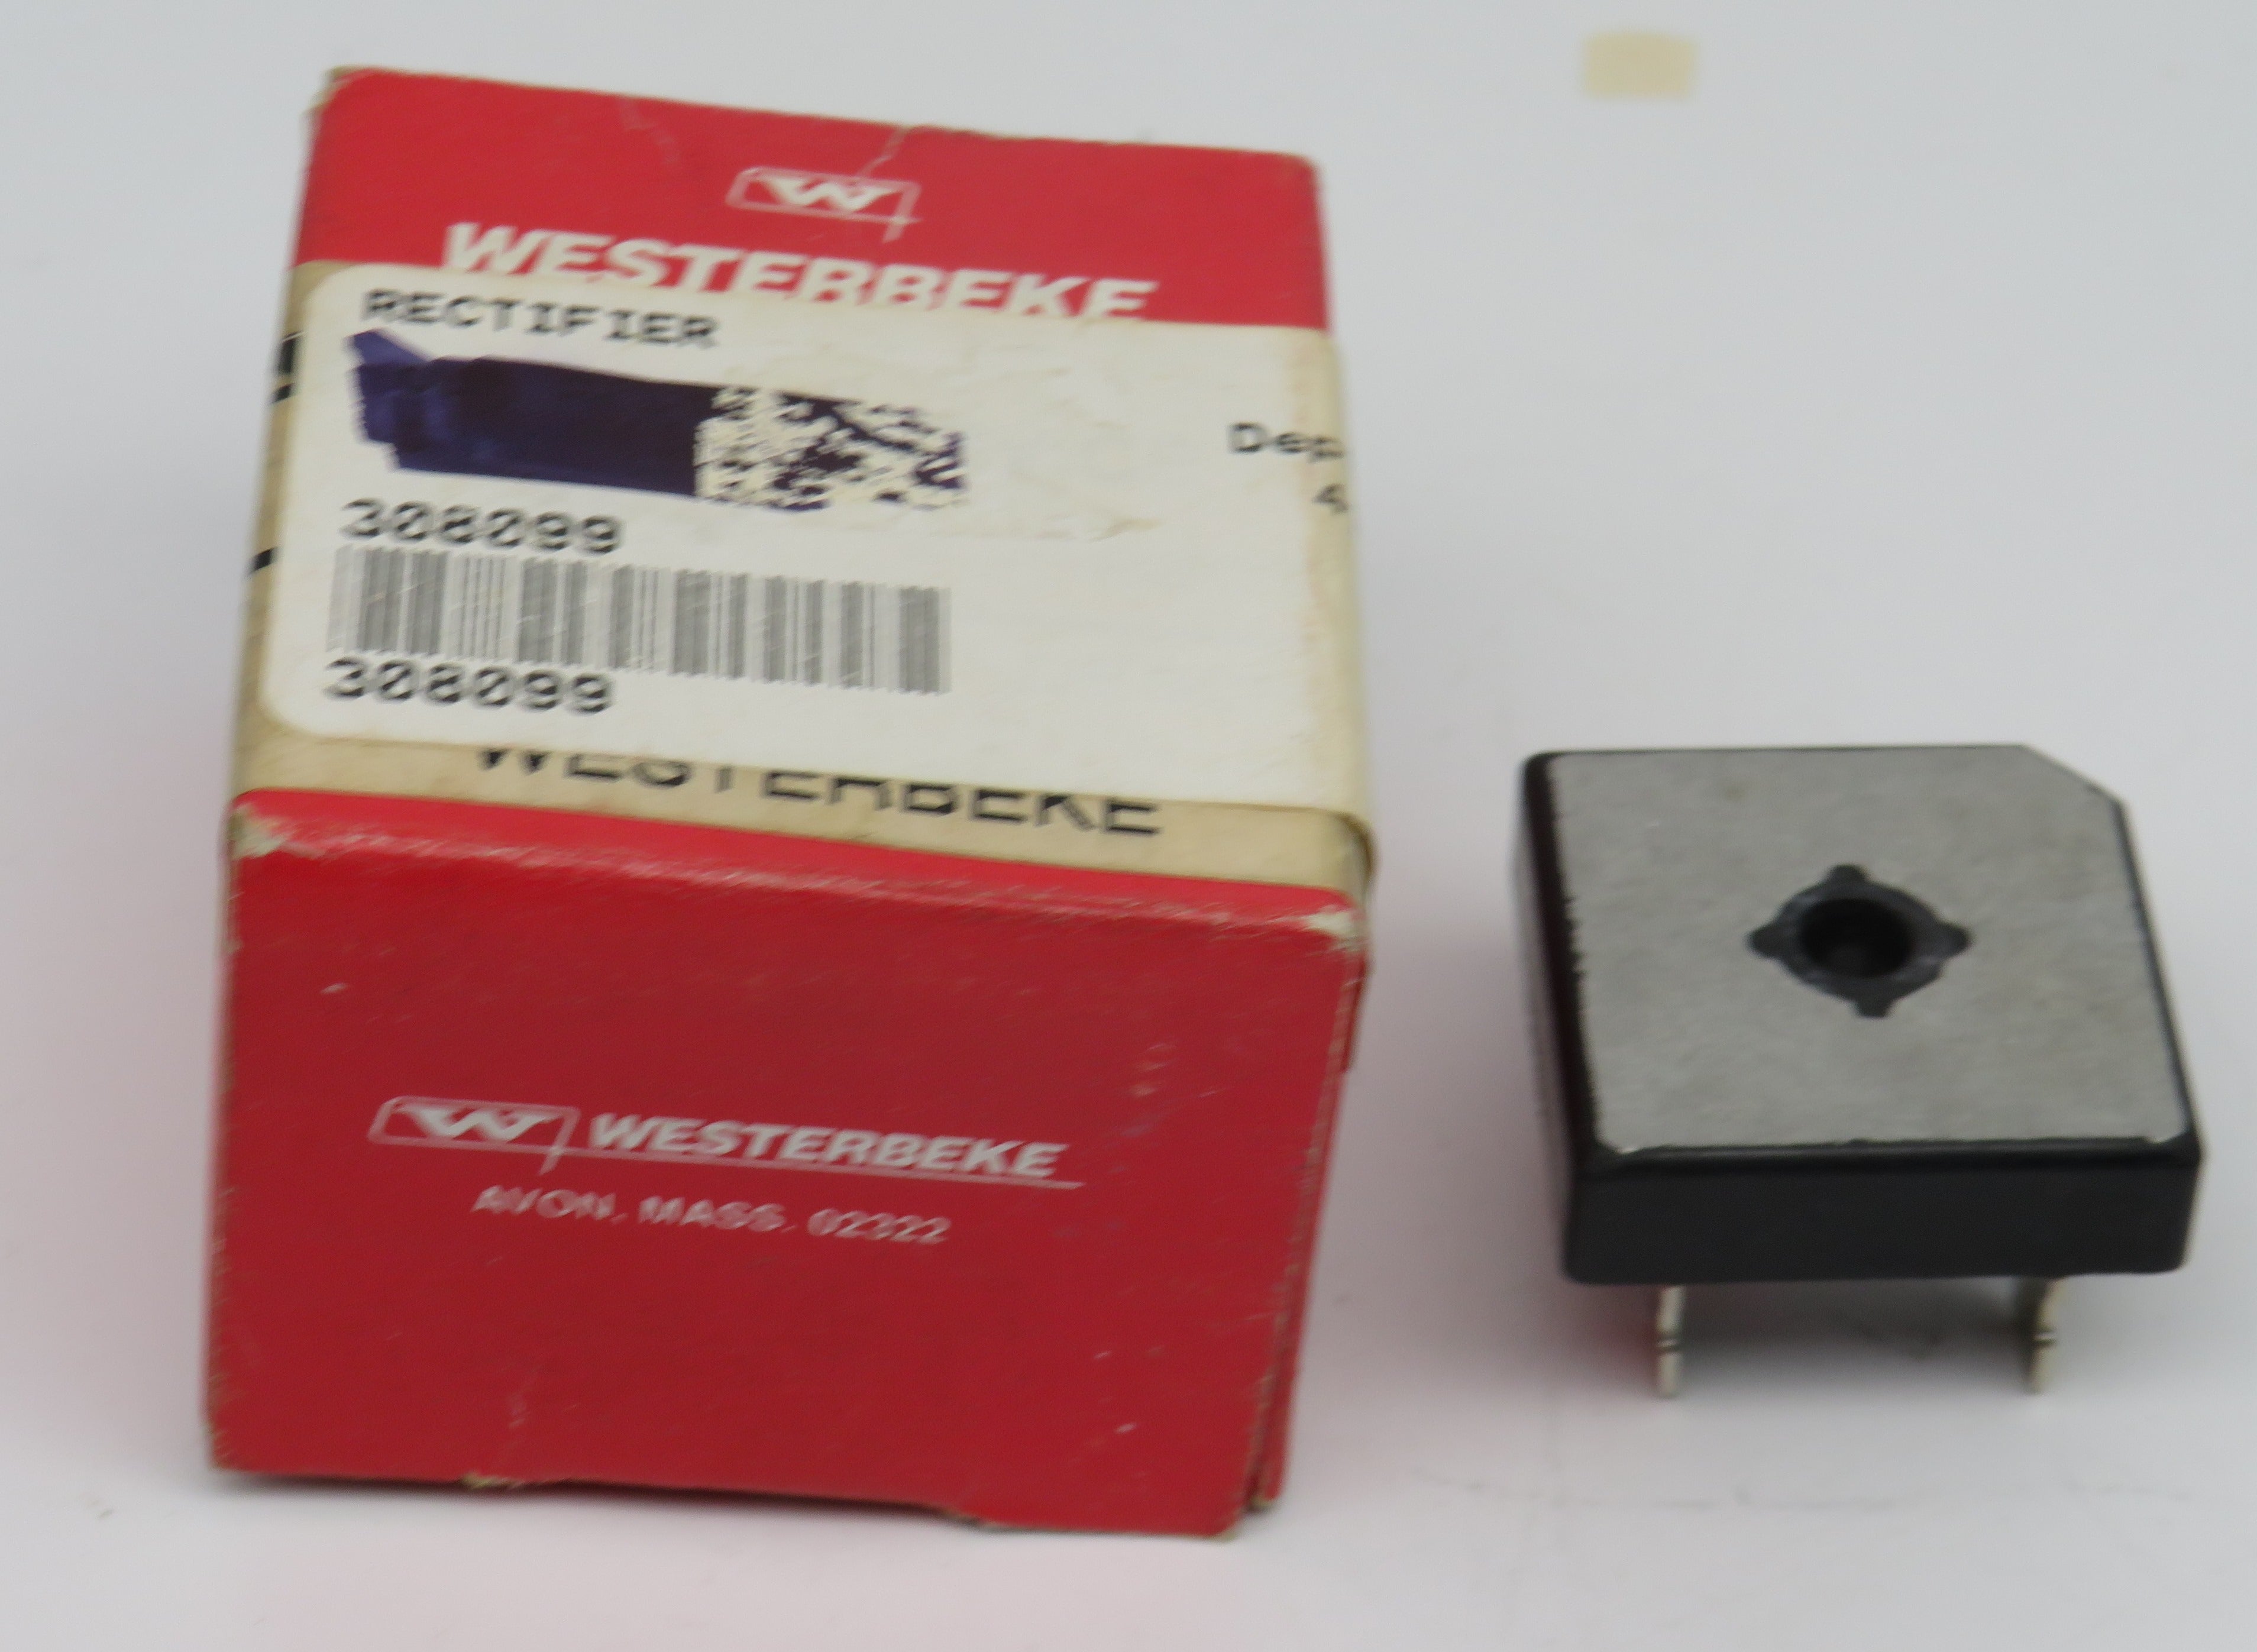 43649 Westerbeke Rectifier (60 Hz) Replaced 308099